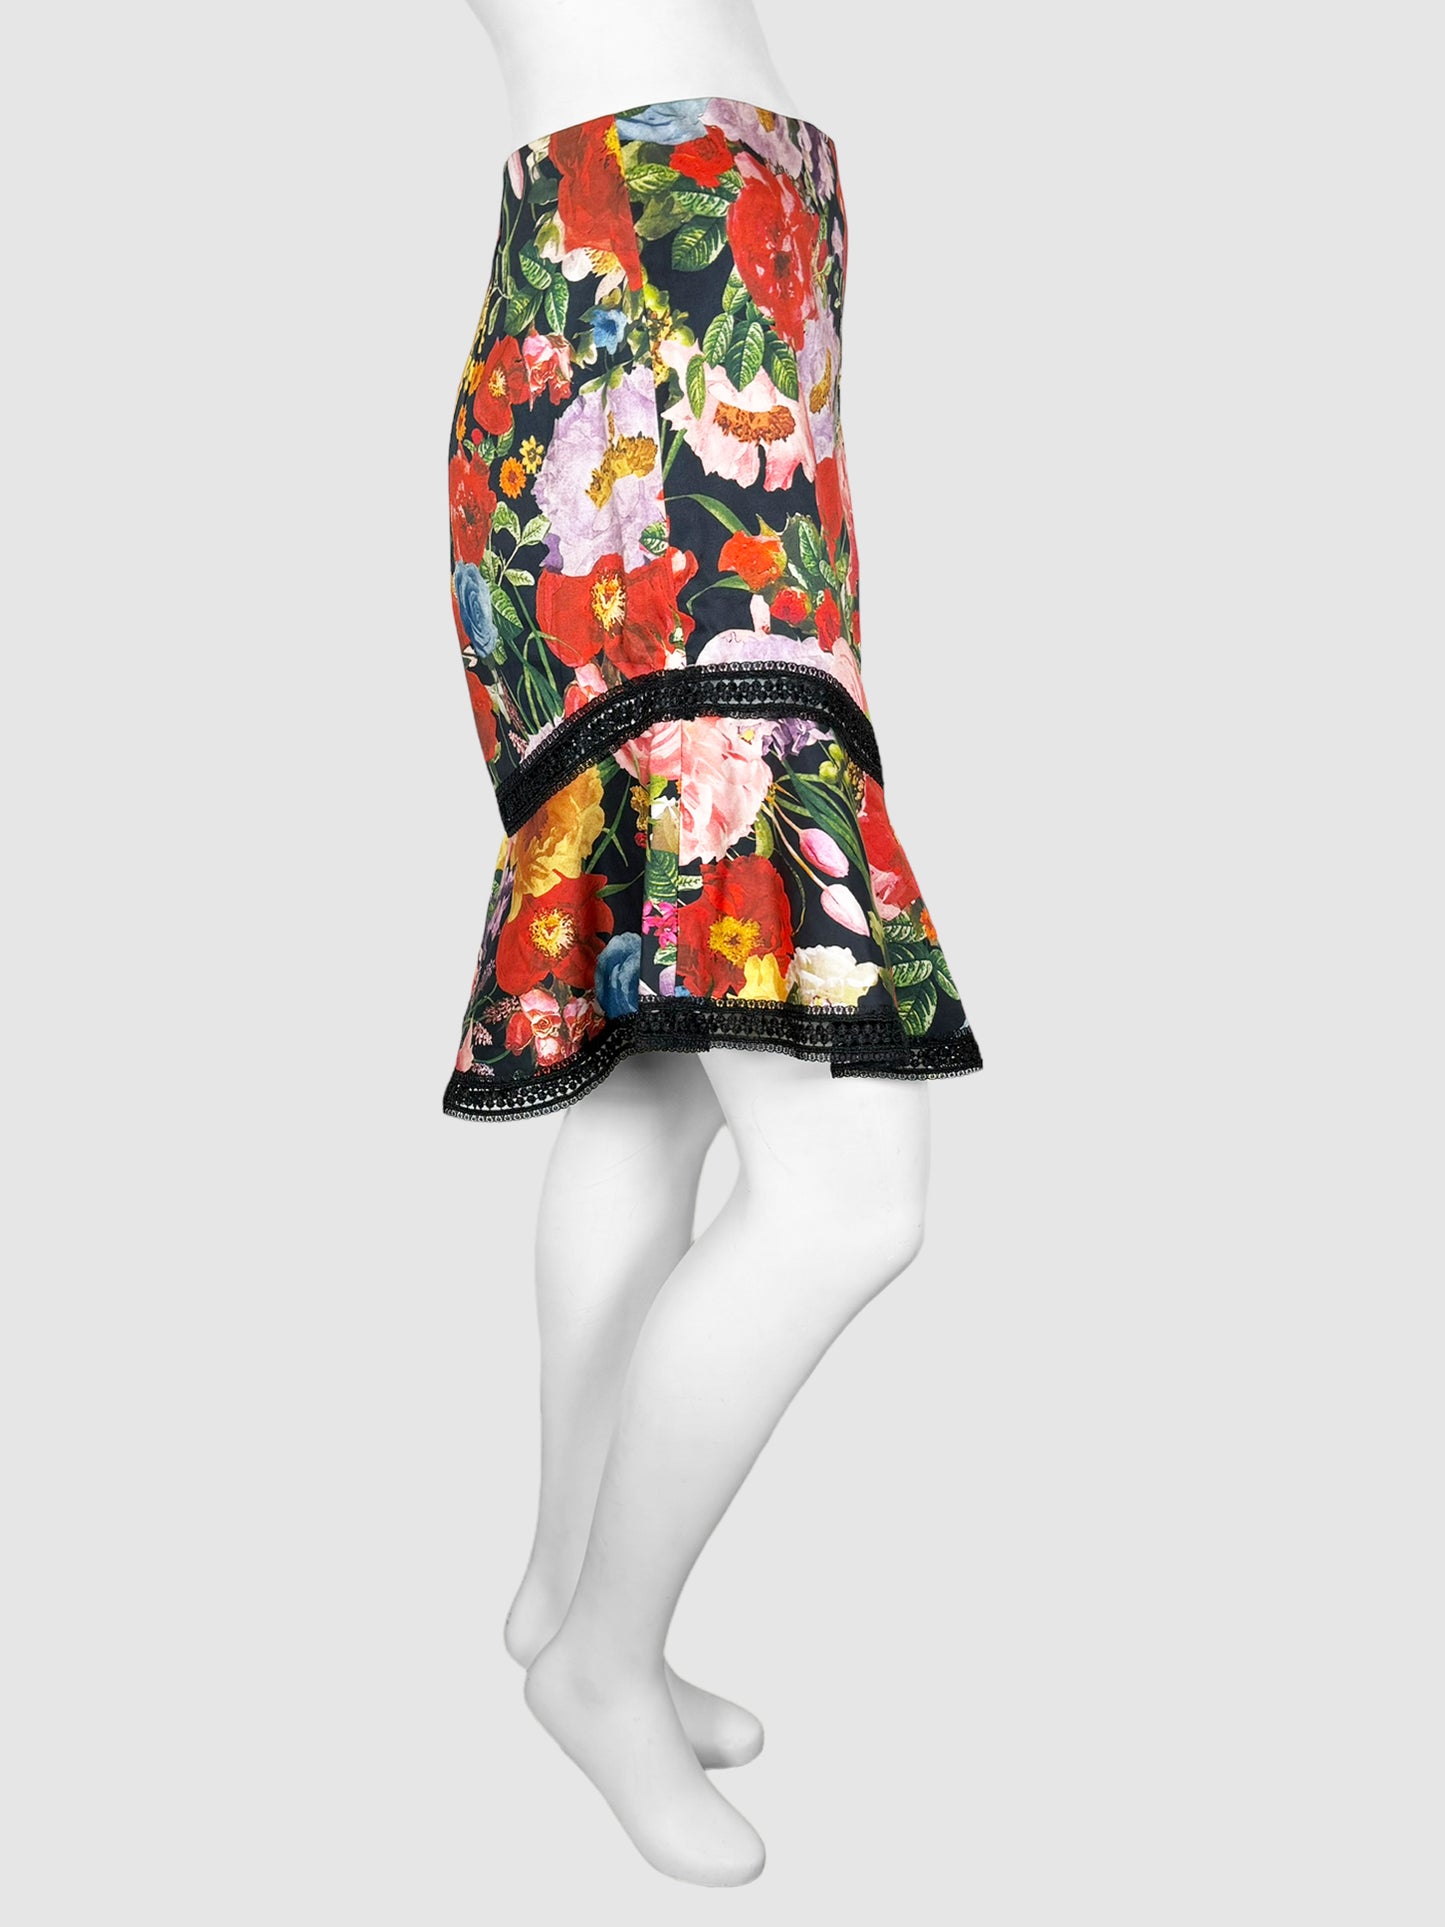 Alice + Olivia Floral Print Mini Skirt - Size 6